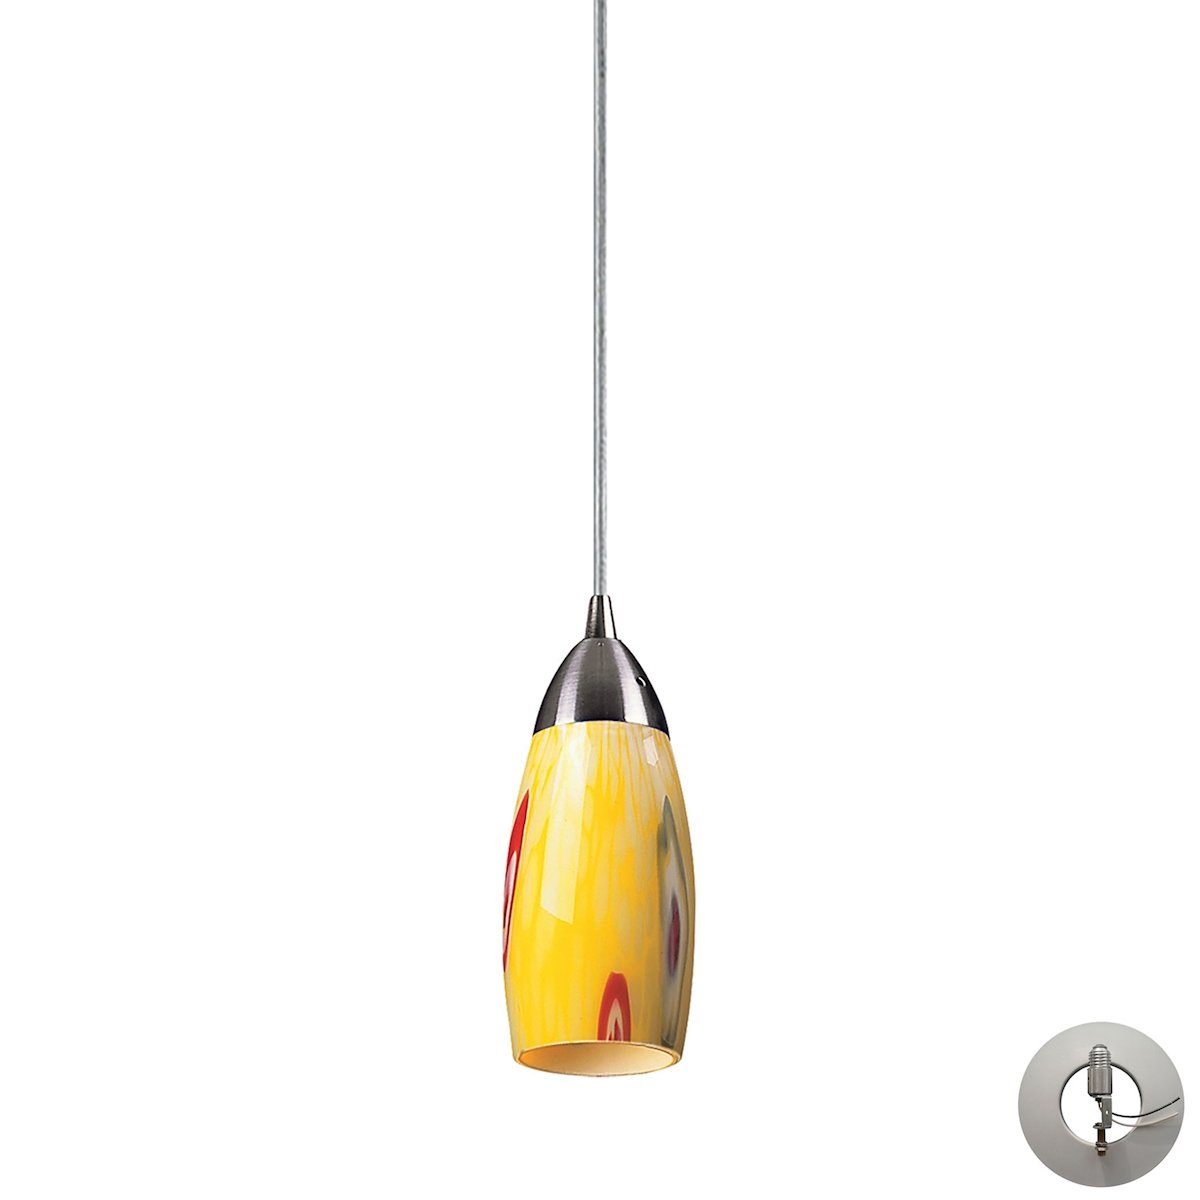 Milan Pendant In Satin Nickel And Yellow Blaze Glass - Includes Recessed Lighting Kit Ceiling Elk Lighting 